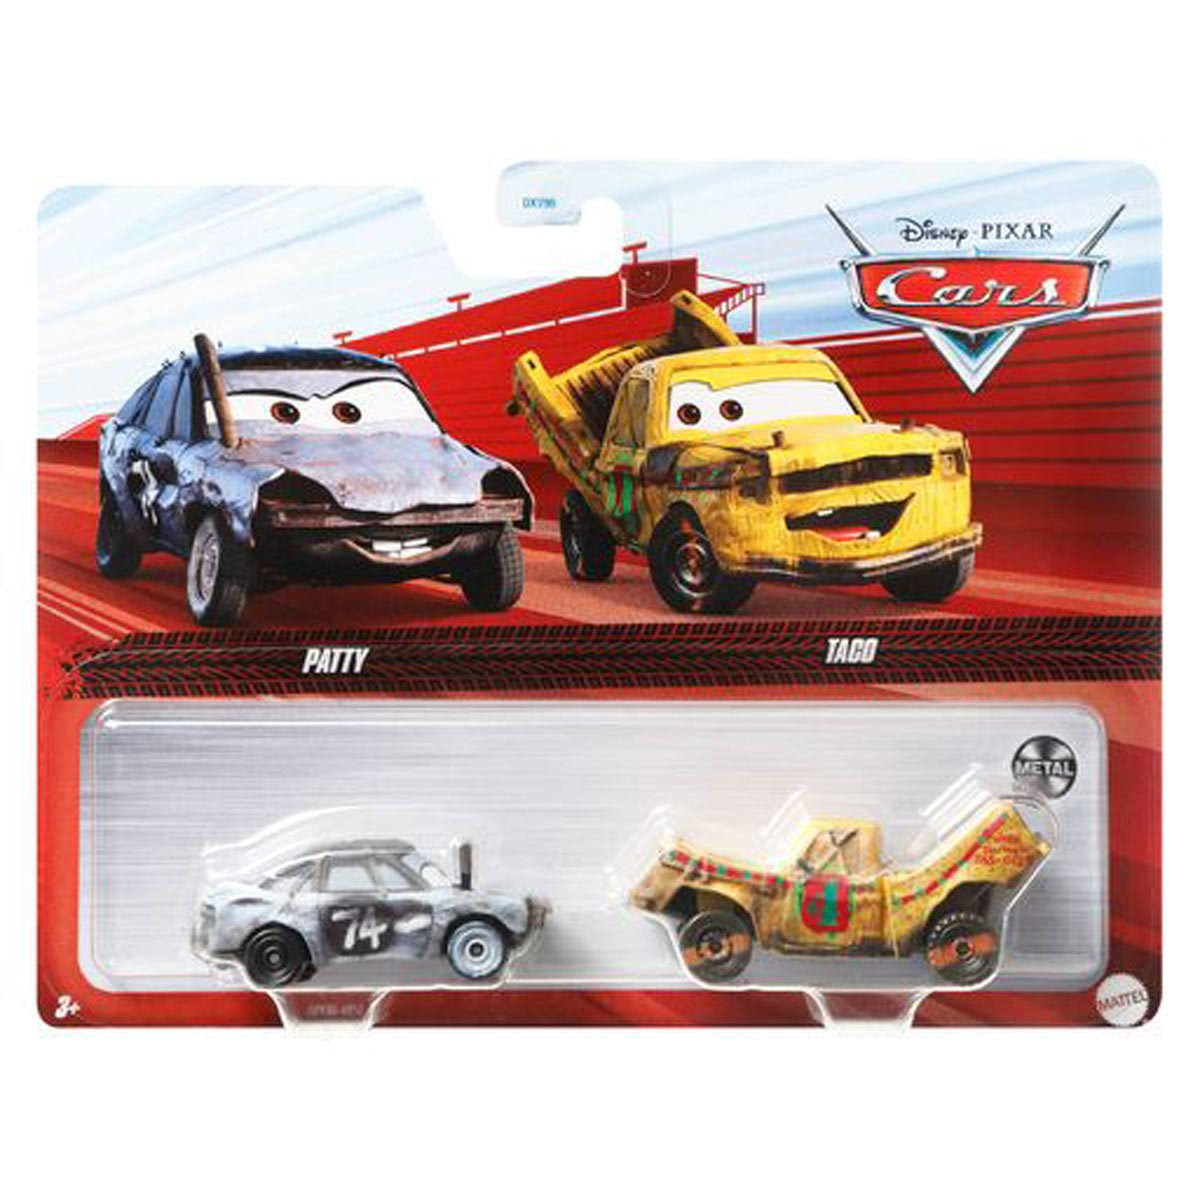 Disney Pixar Cars Patty and Taco 2-Pack